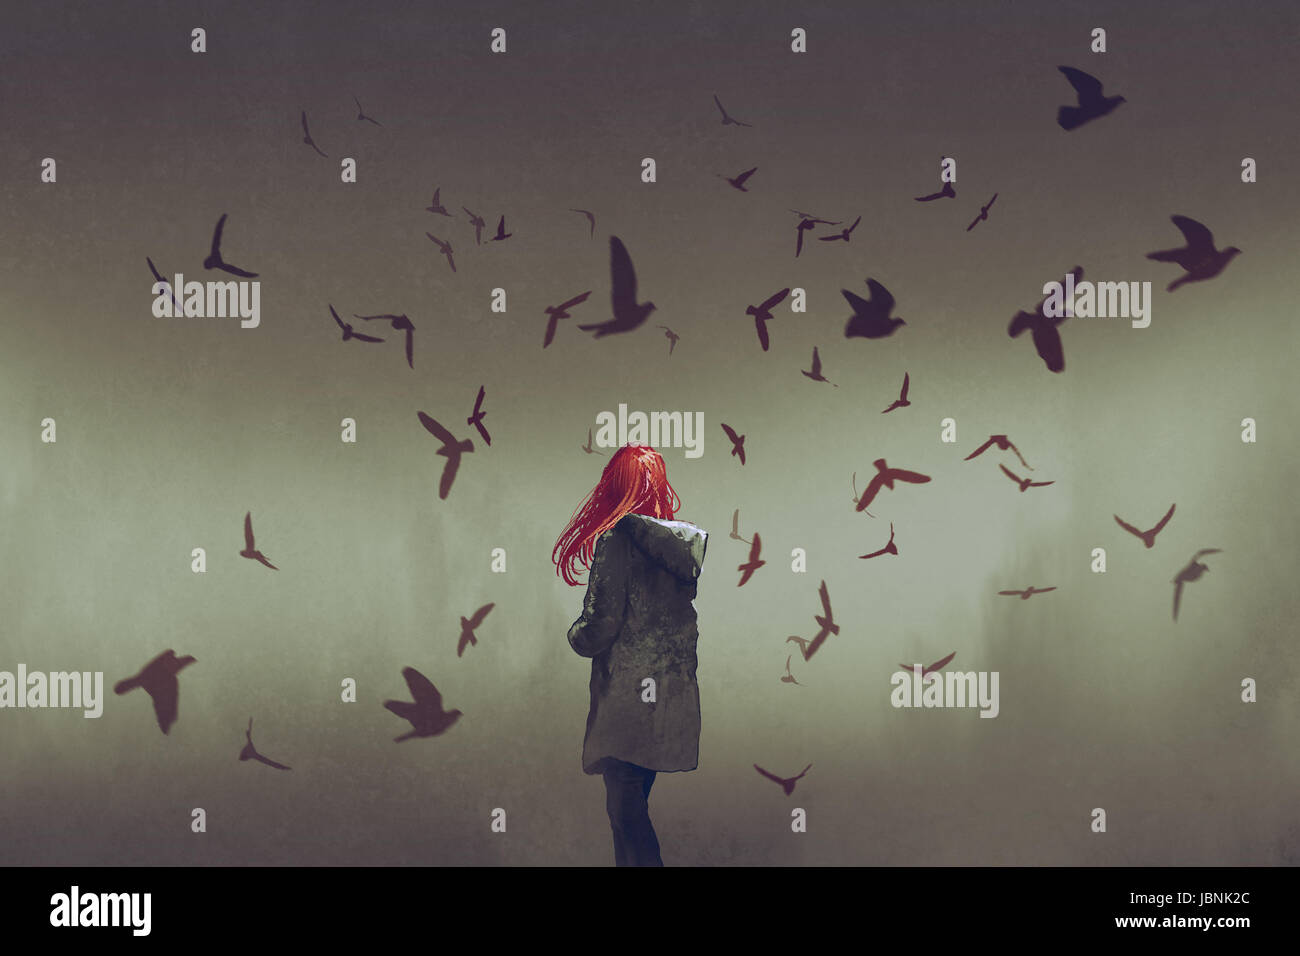 die Frau mit roten Haaren ansehen unter den Vögel, digitale Kunststil, Illustration, Malerei Stockfoto